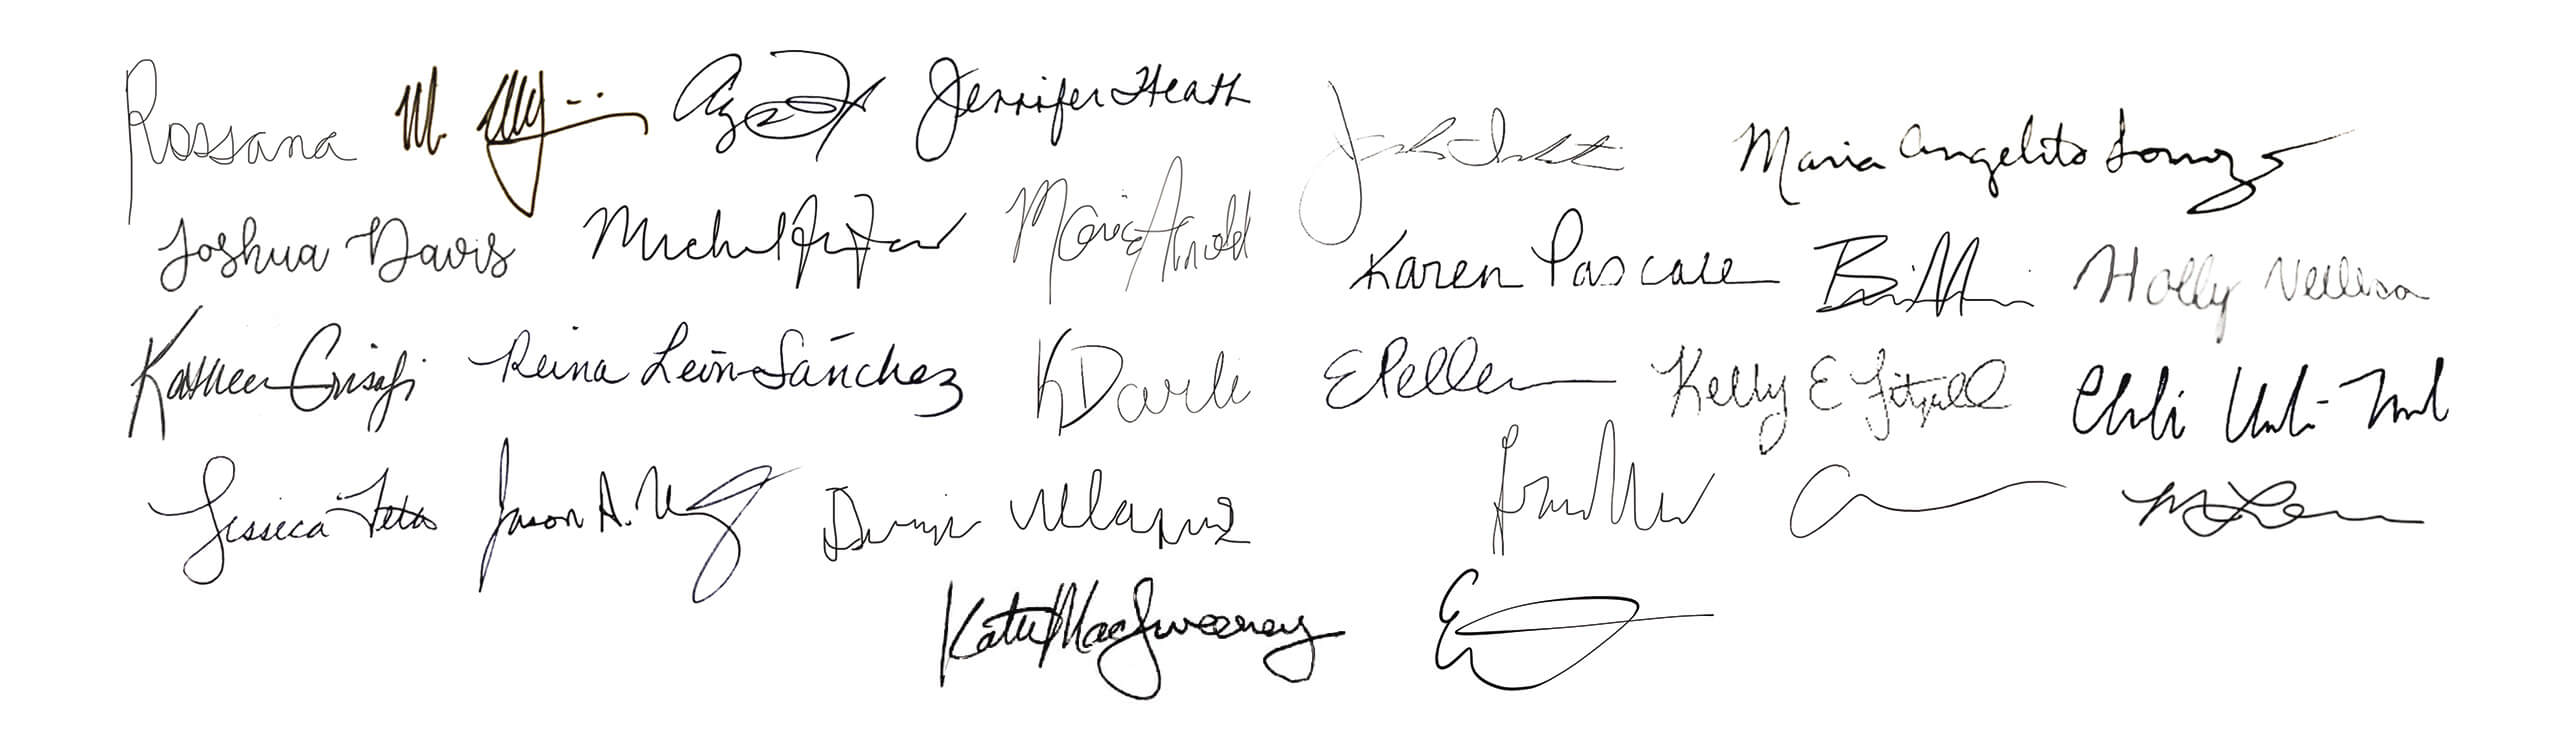 Signatures from UWGNW